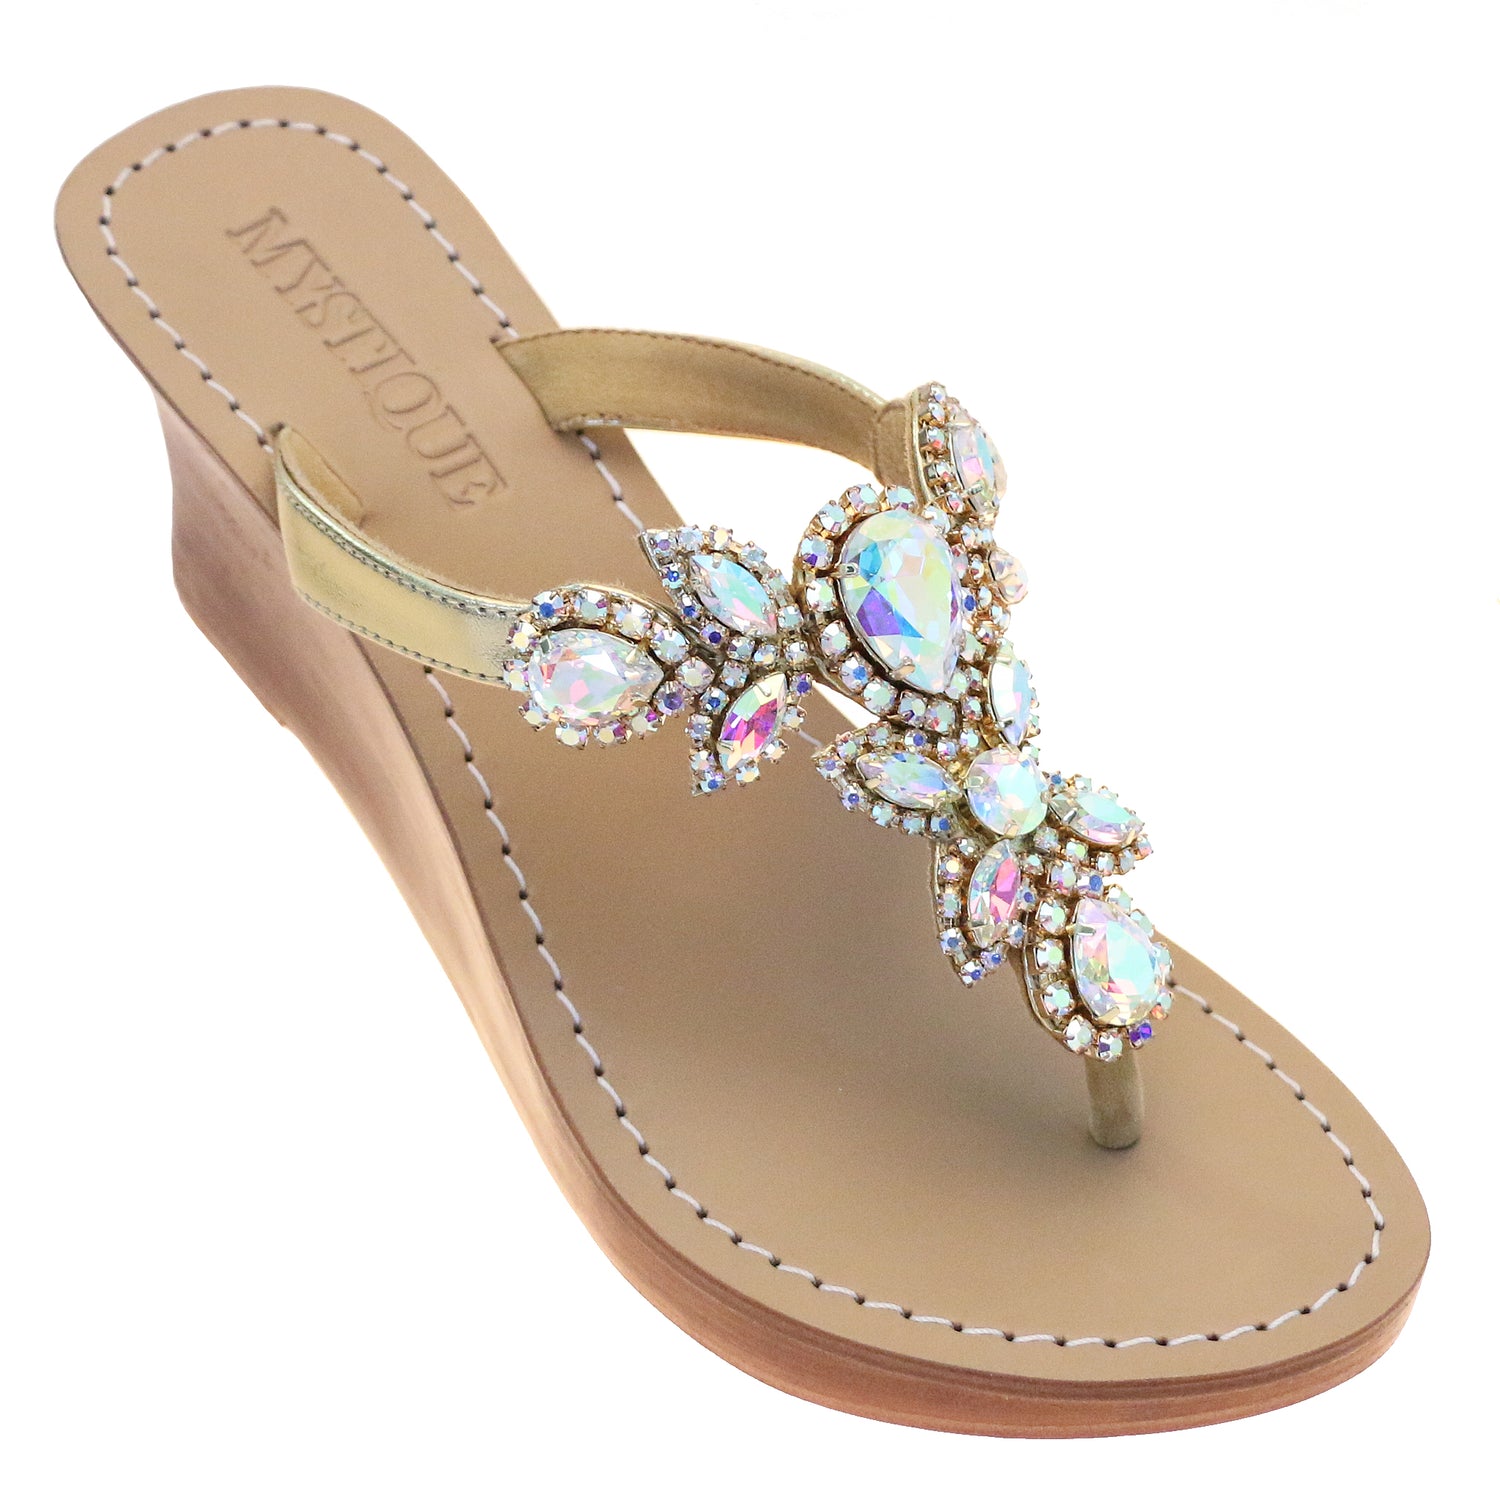 Belmont - Women's Gold Jeweled Wedge Sandals | Mystique Sandals